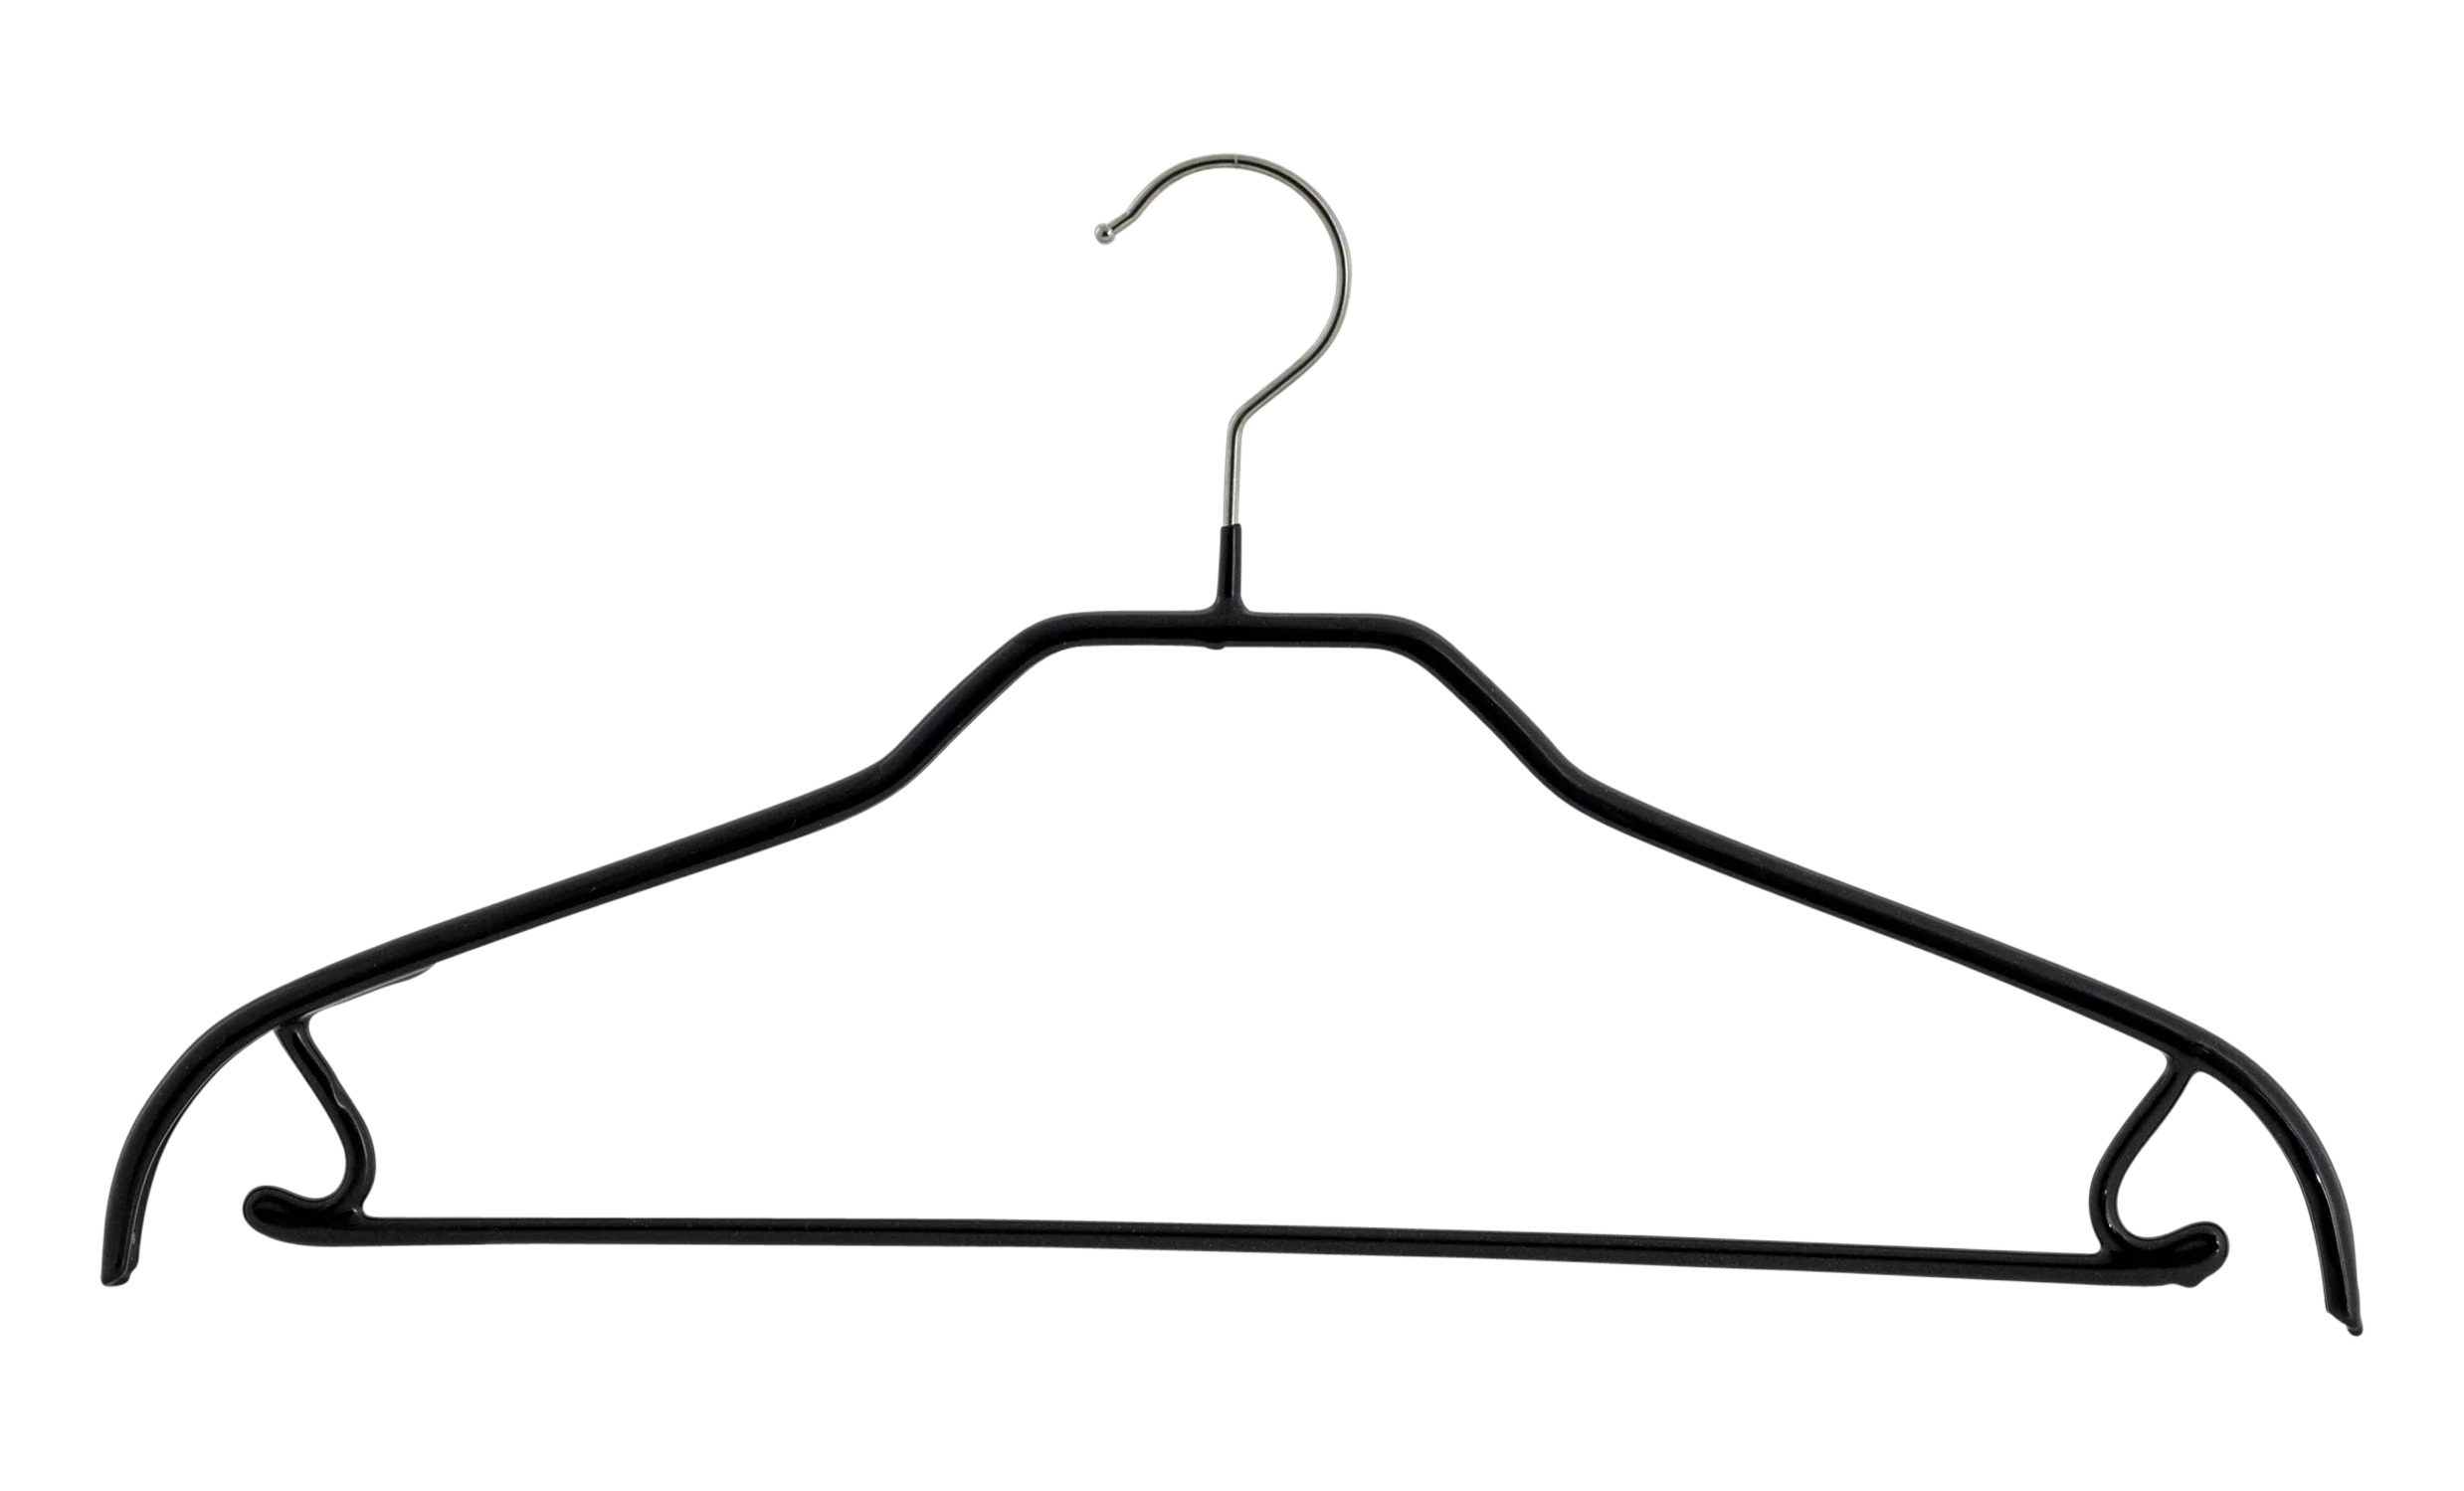 MAWA Kleiderbügel mit Rockhaken Silhouette/FRS - 41cm